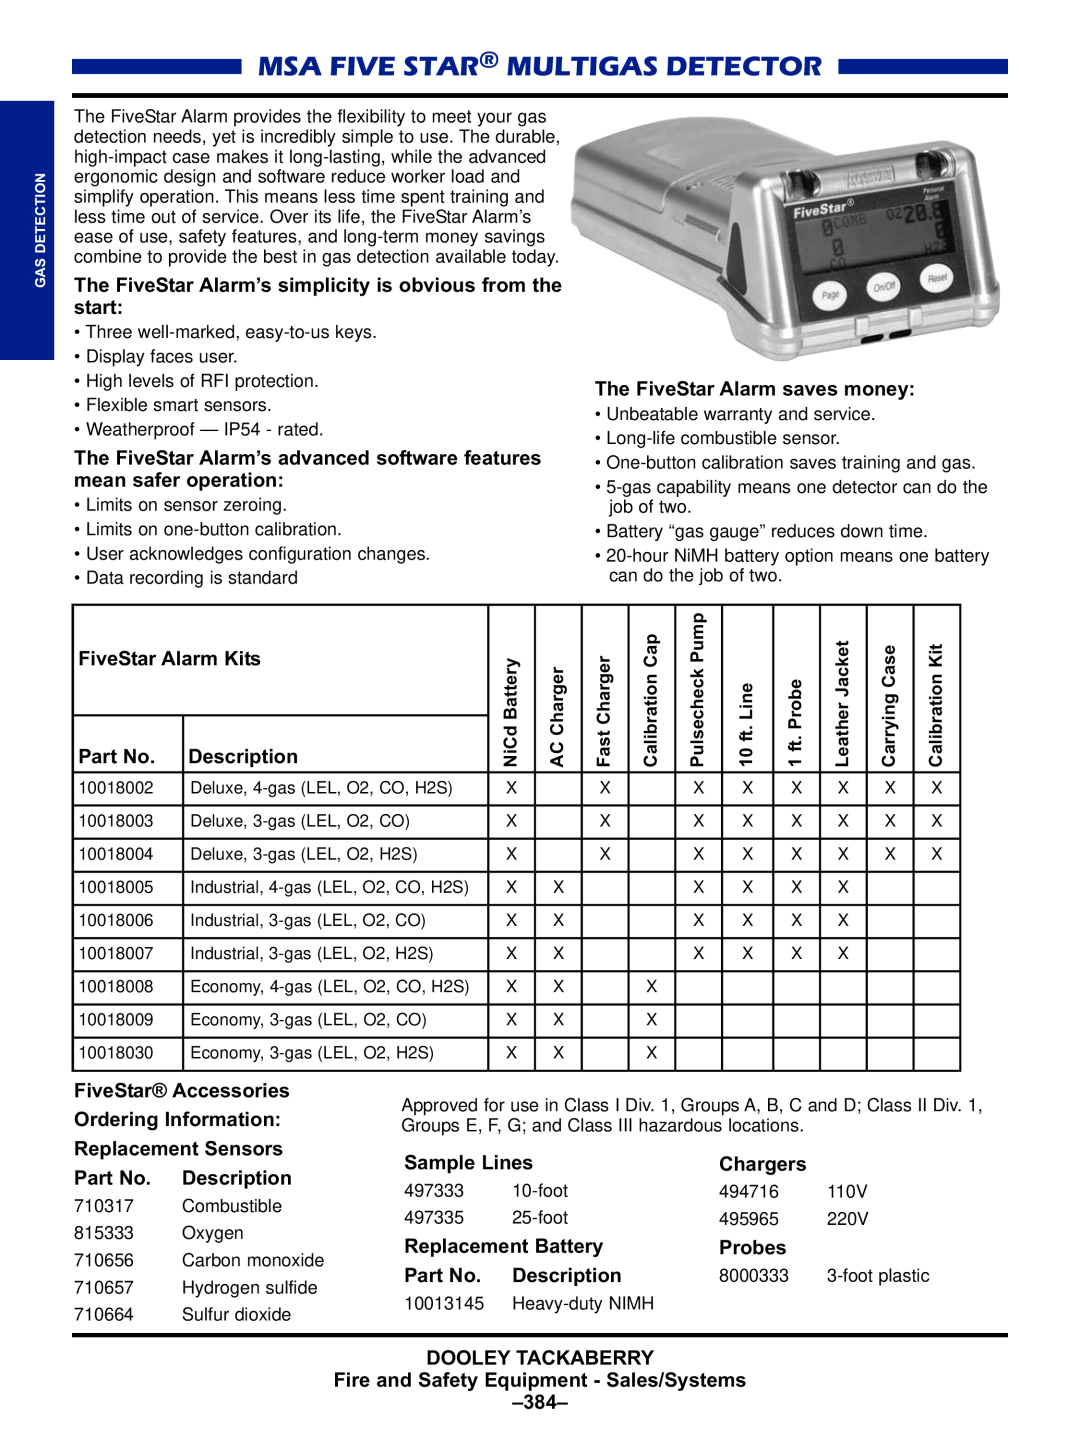 Black & Decker MULTI-GAS DETECTORS manual Msa Five Star Multigas Detector 